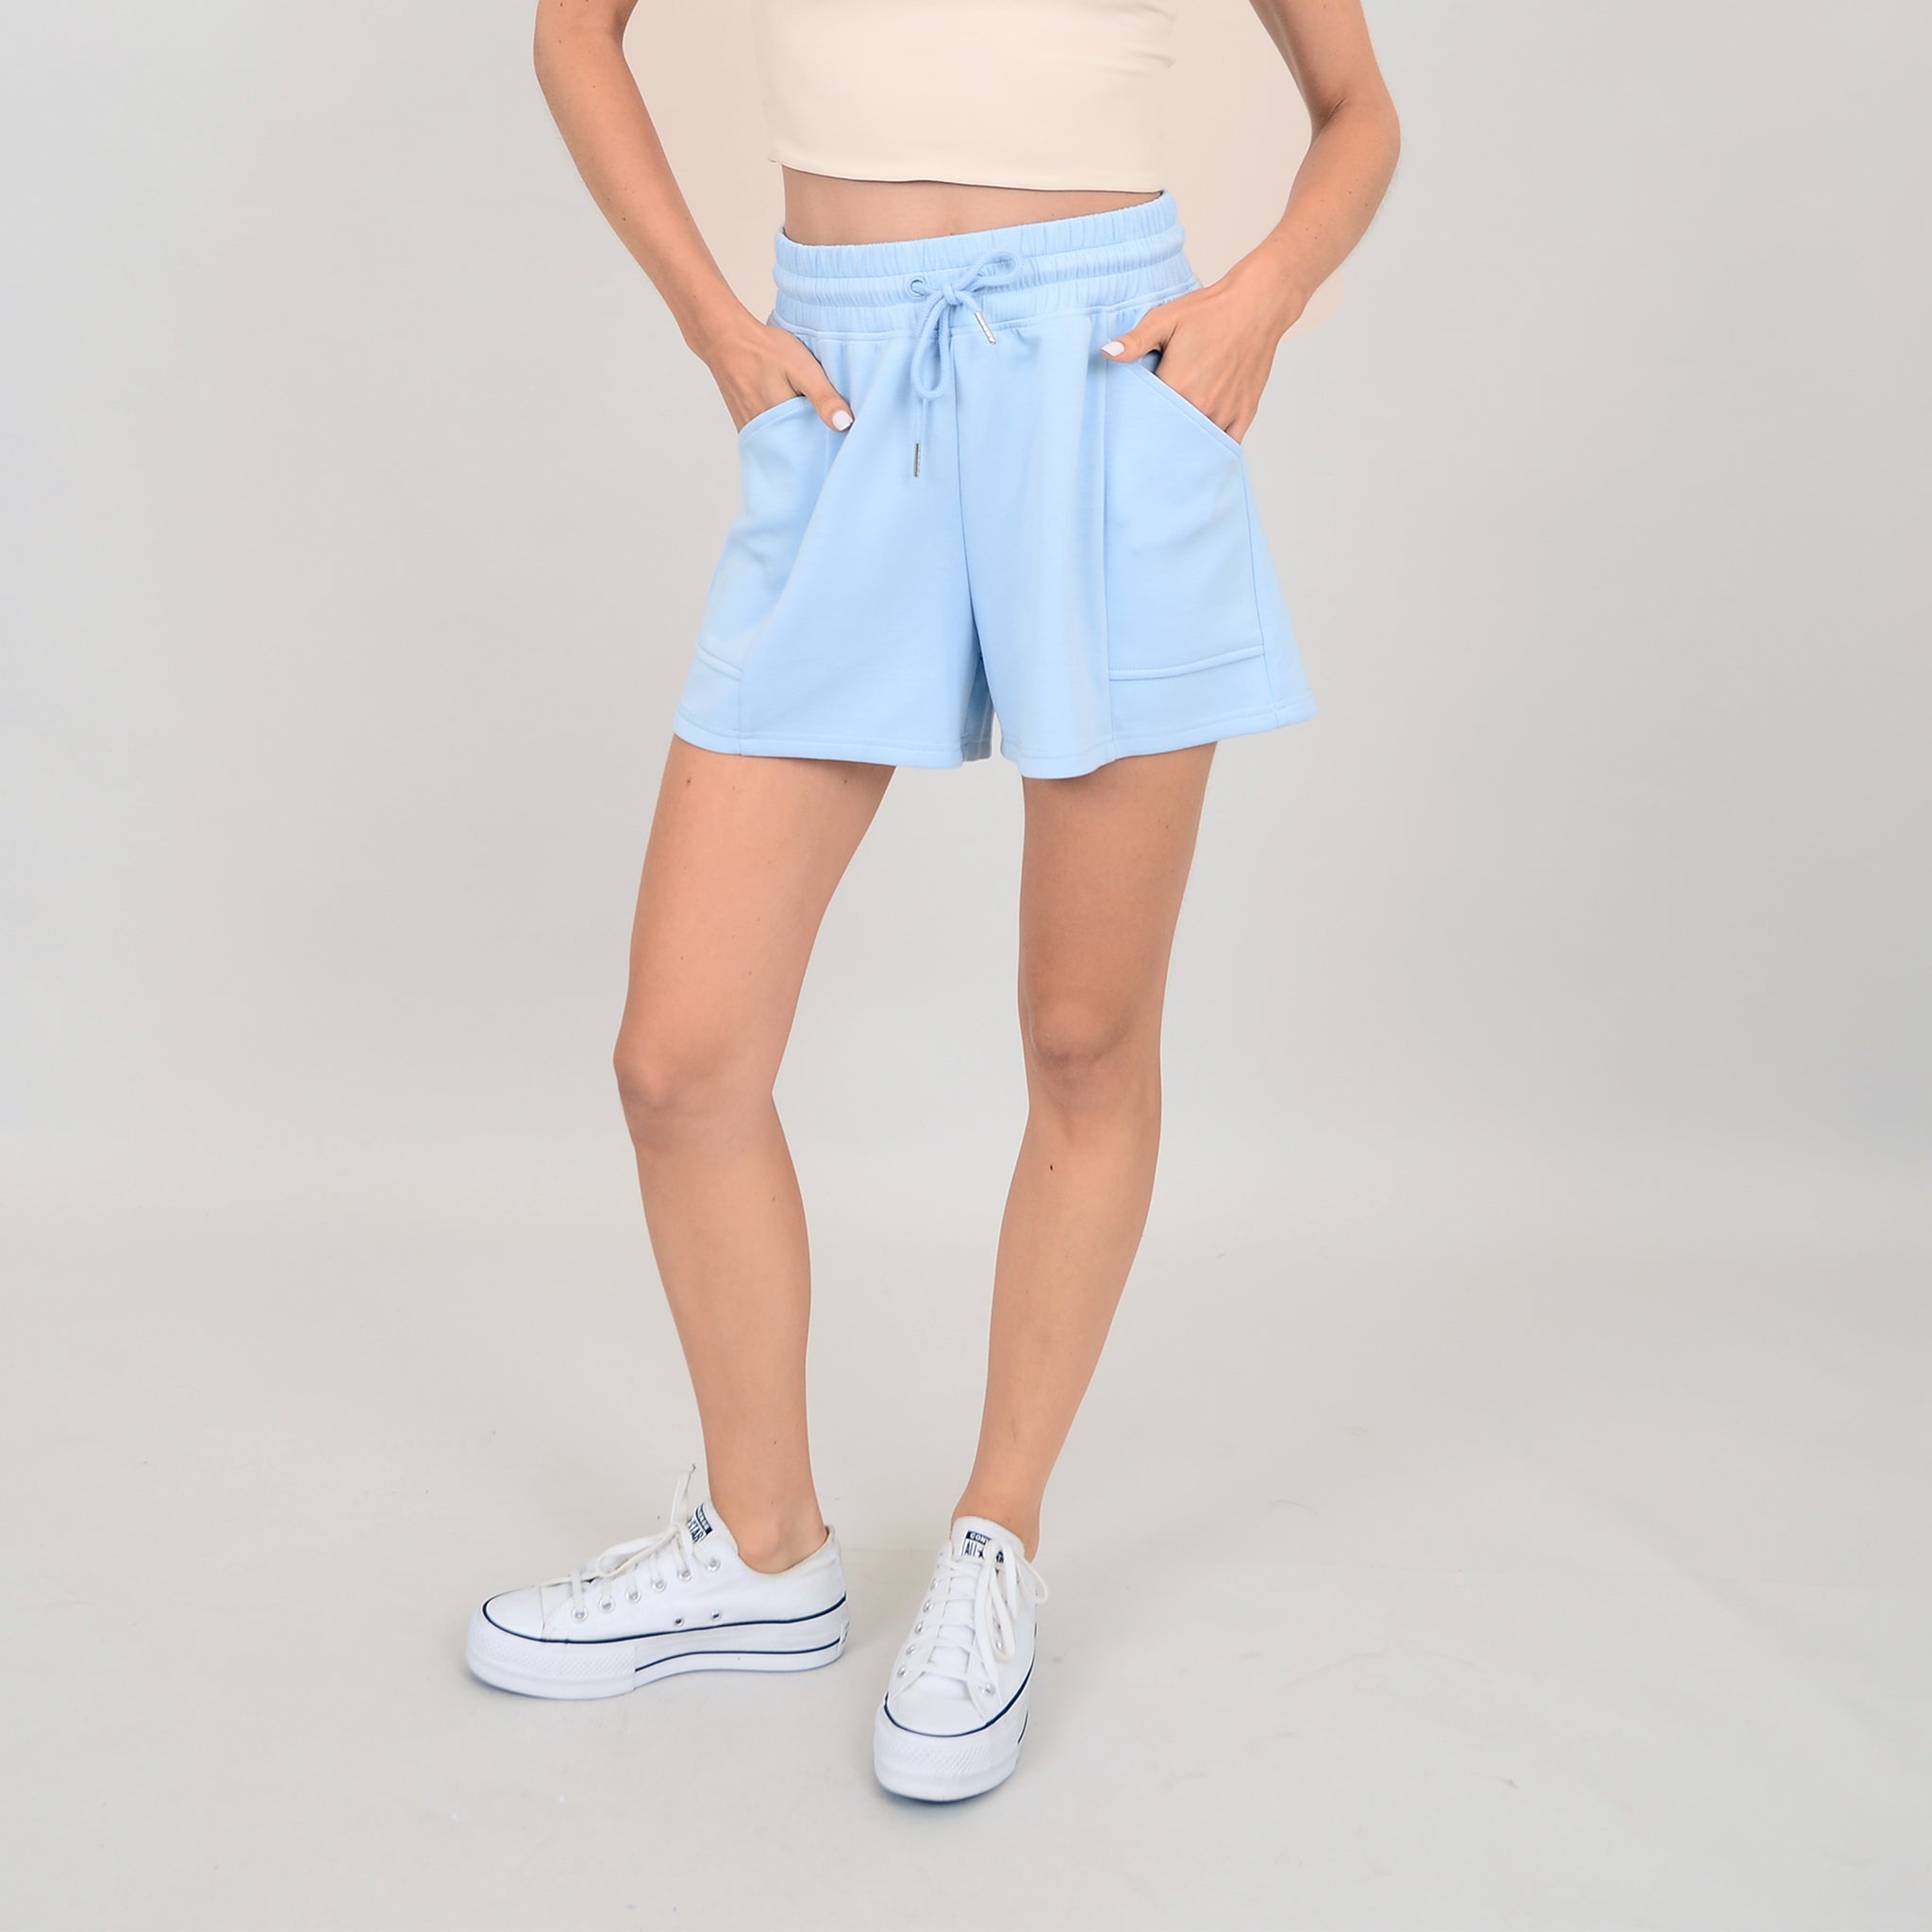 Senza Soft Shorts - Blue